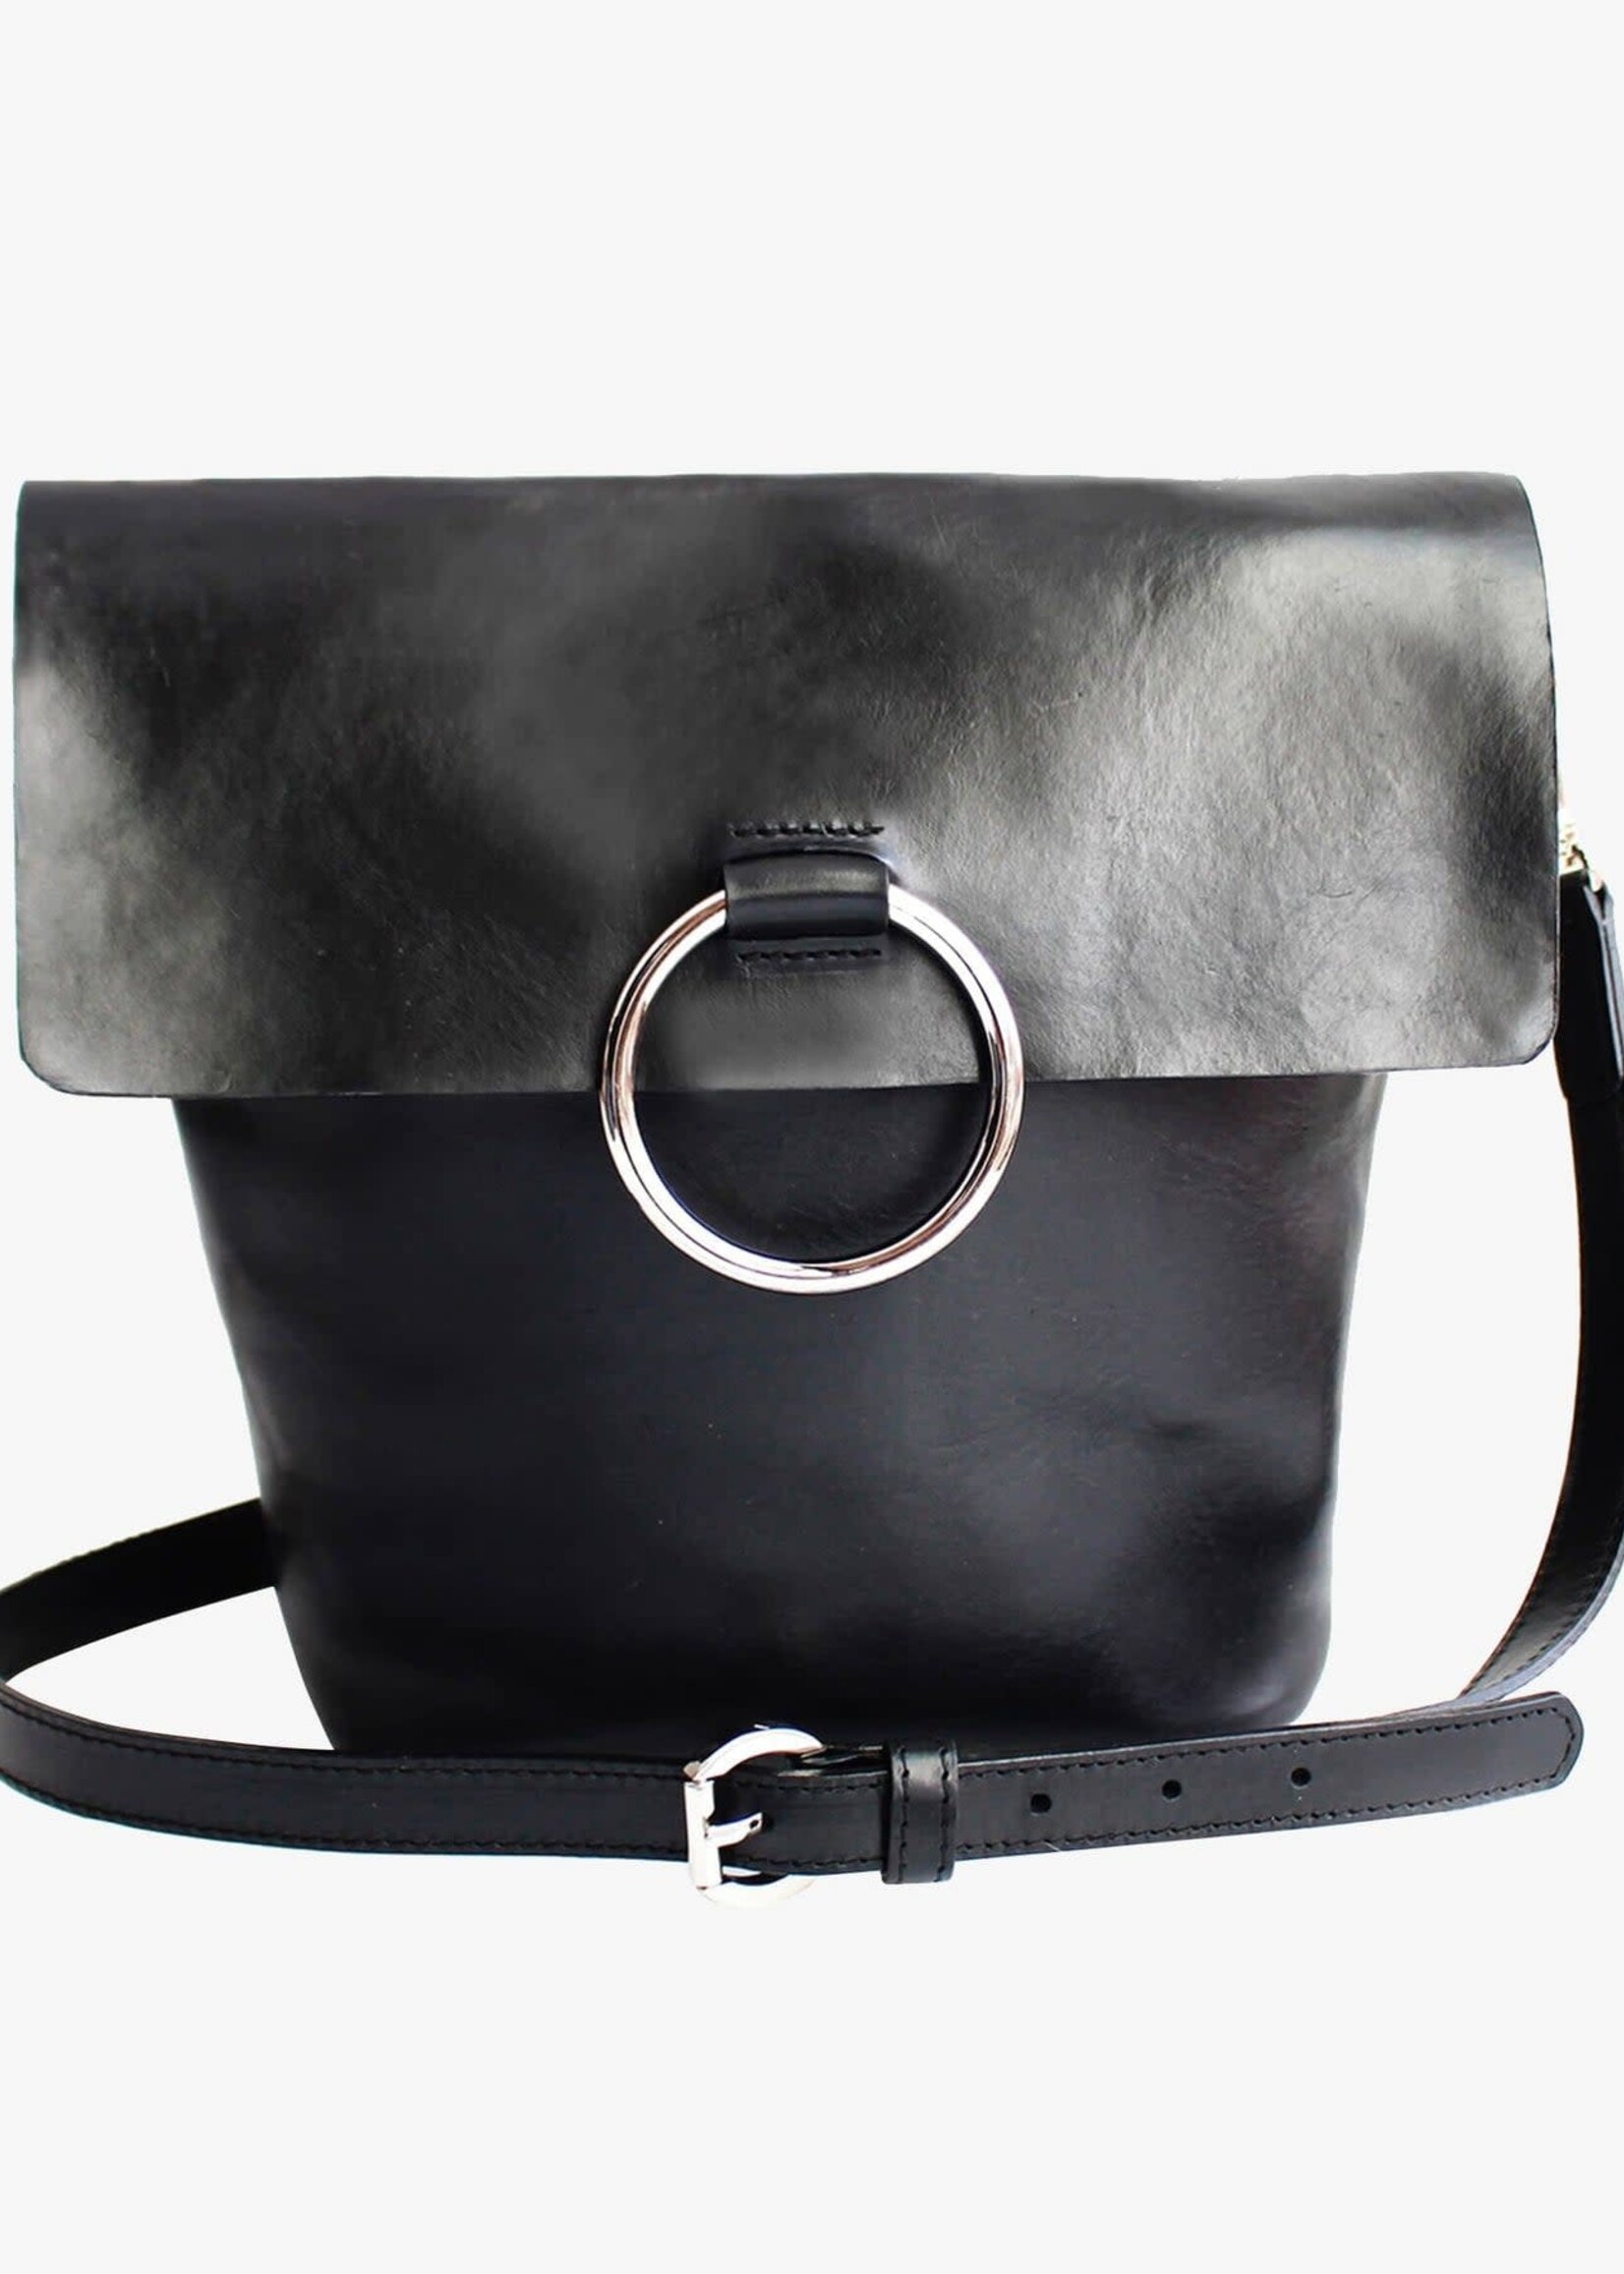 BRAVE LEATHER VIRTUE leather purse